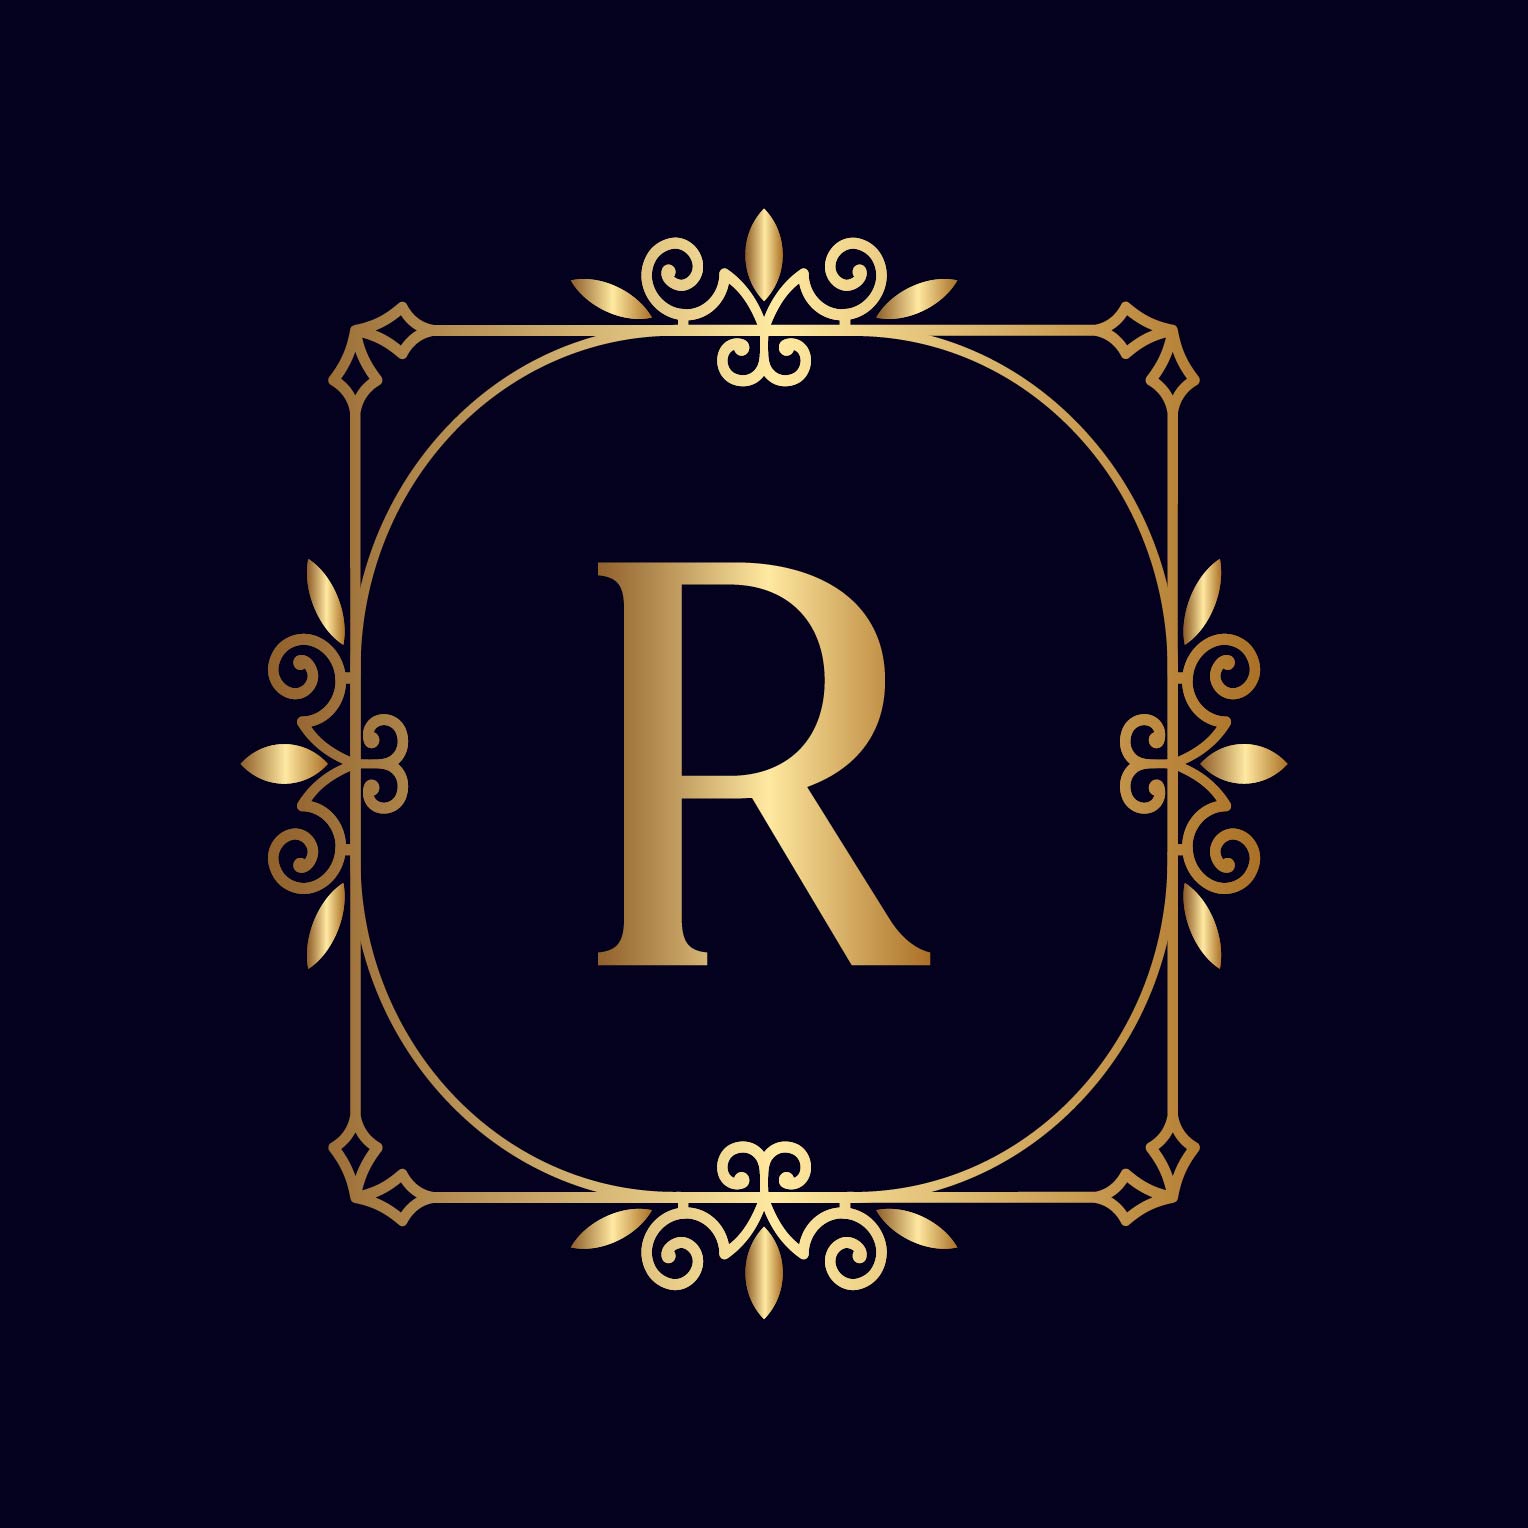 Artistic Gold Letter R Logos Design preview image.